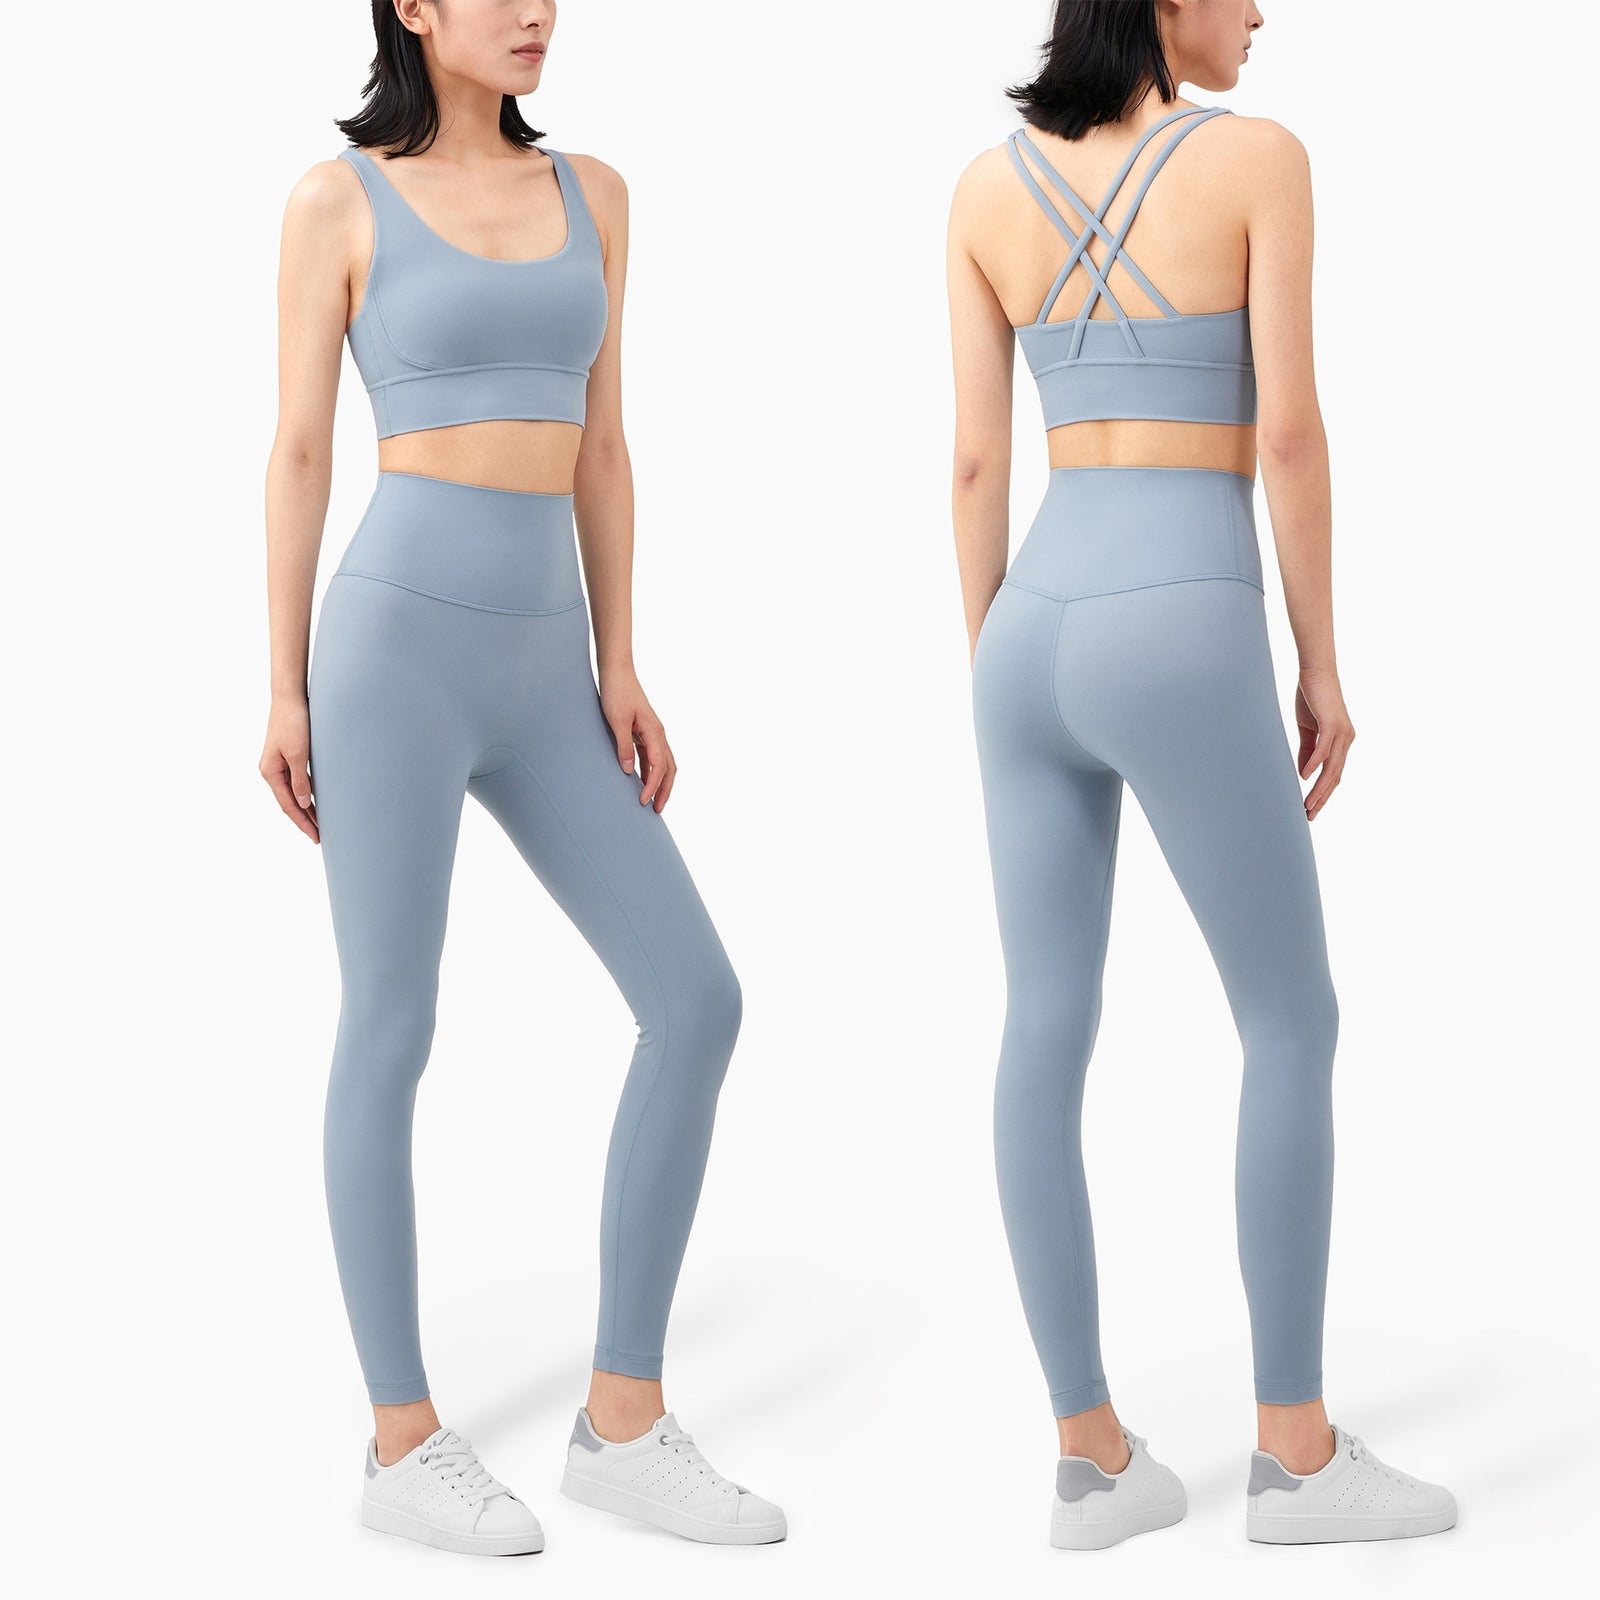 Vnazvnasi Yoga Set 2 Piece Workout Clothes for Women Cross Back Crop Top Sports Bra Fitness Top Gym Leggings Yoga Sportswear